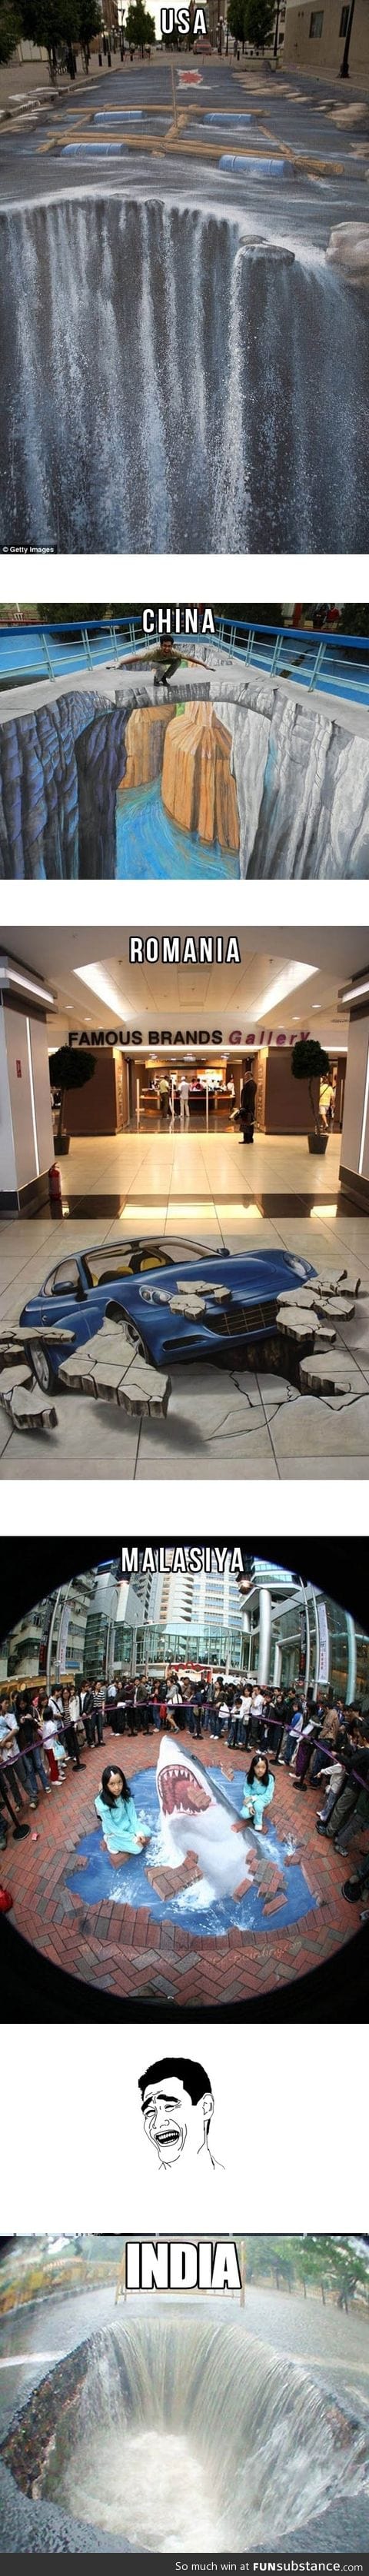 Amazing 3D street art!